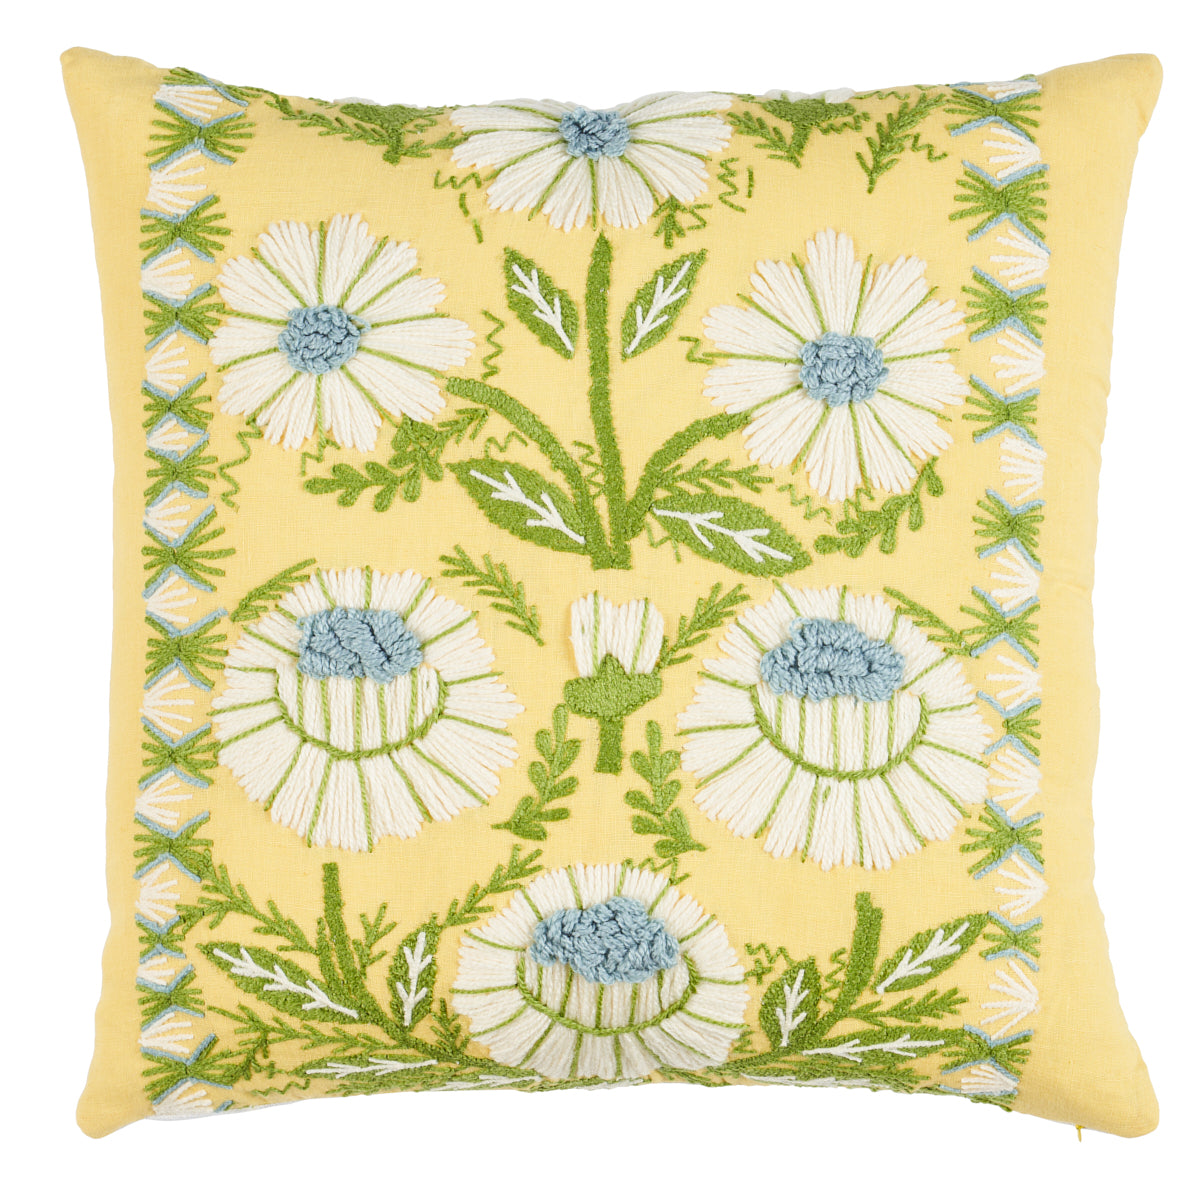 Purchase So7233305 | Marguerite Embroidery Pillow, Buttercup - Schumacher Pillows